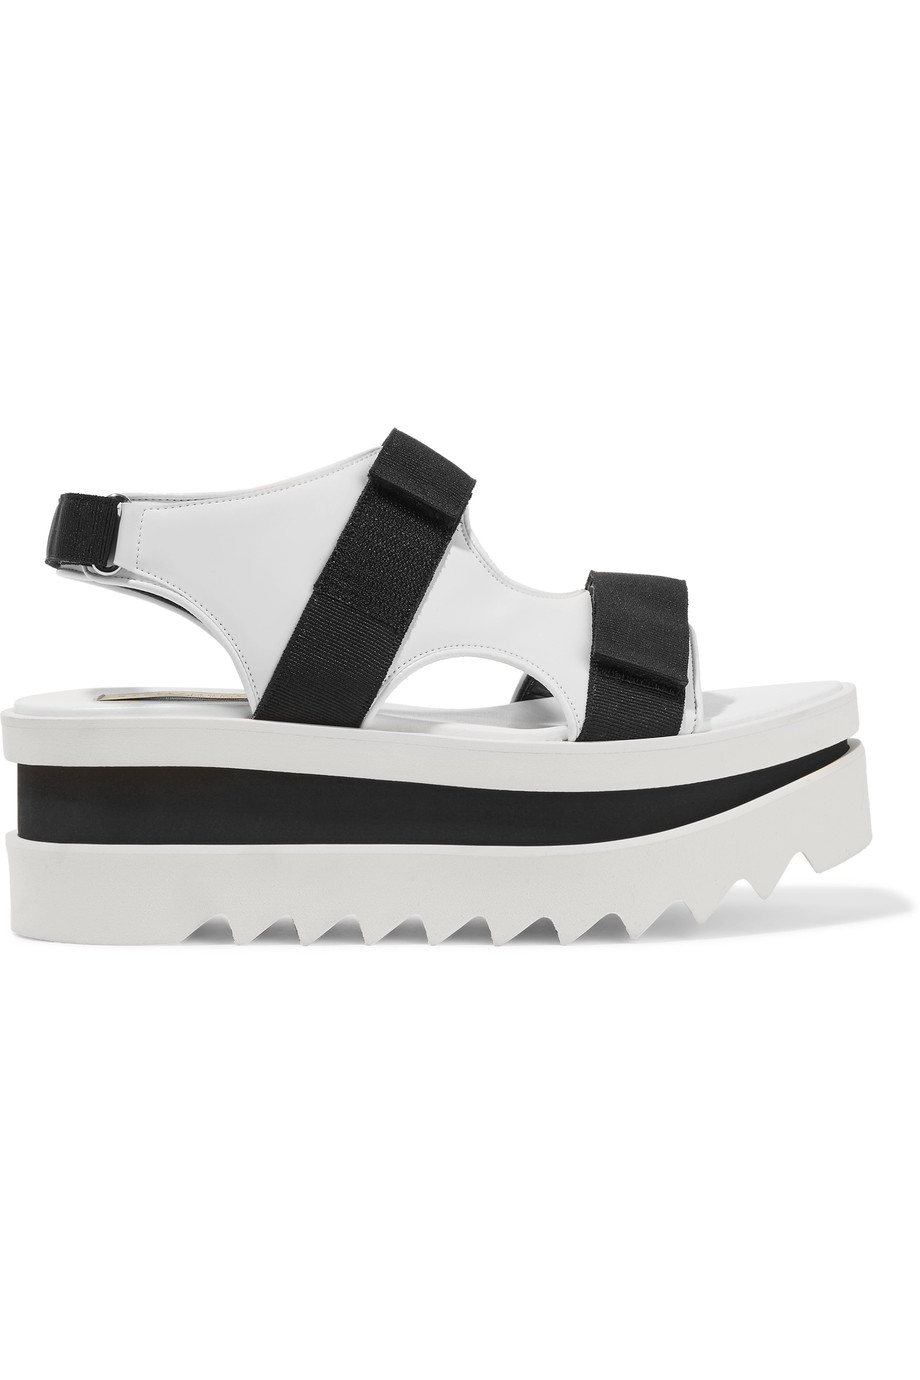 white rubber platform sandals